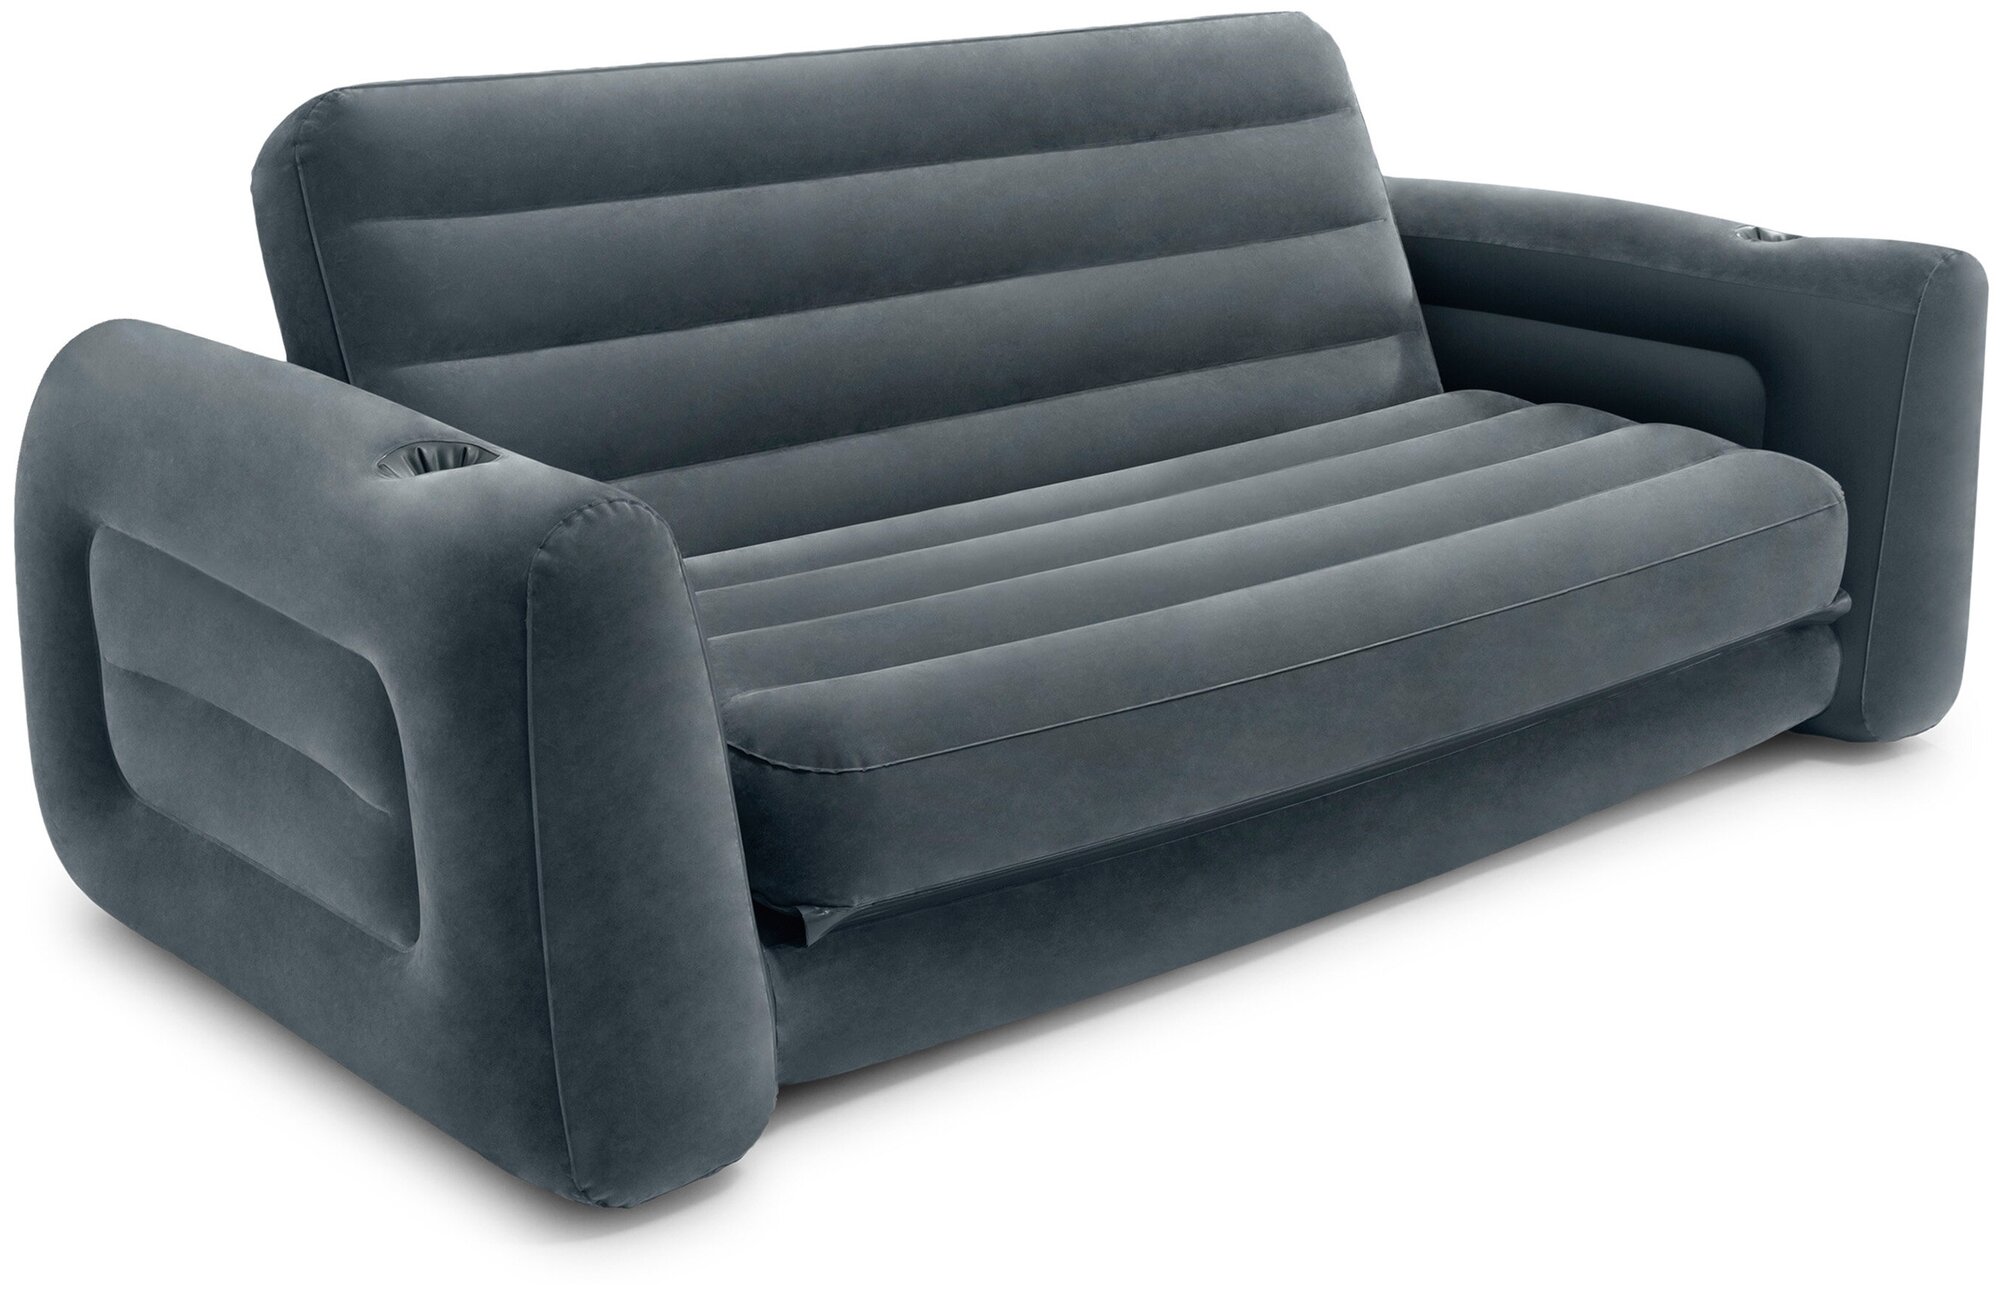 Надувной диван Intex Pull-Out Sofa (66552)